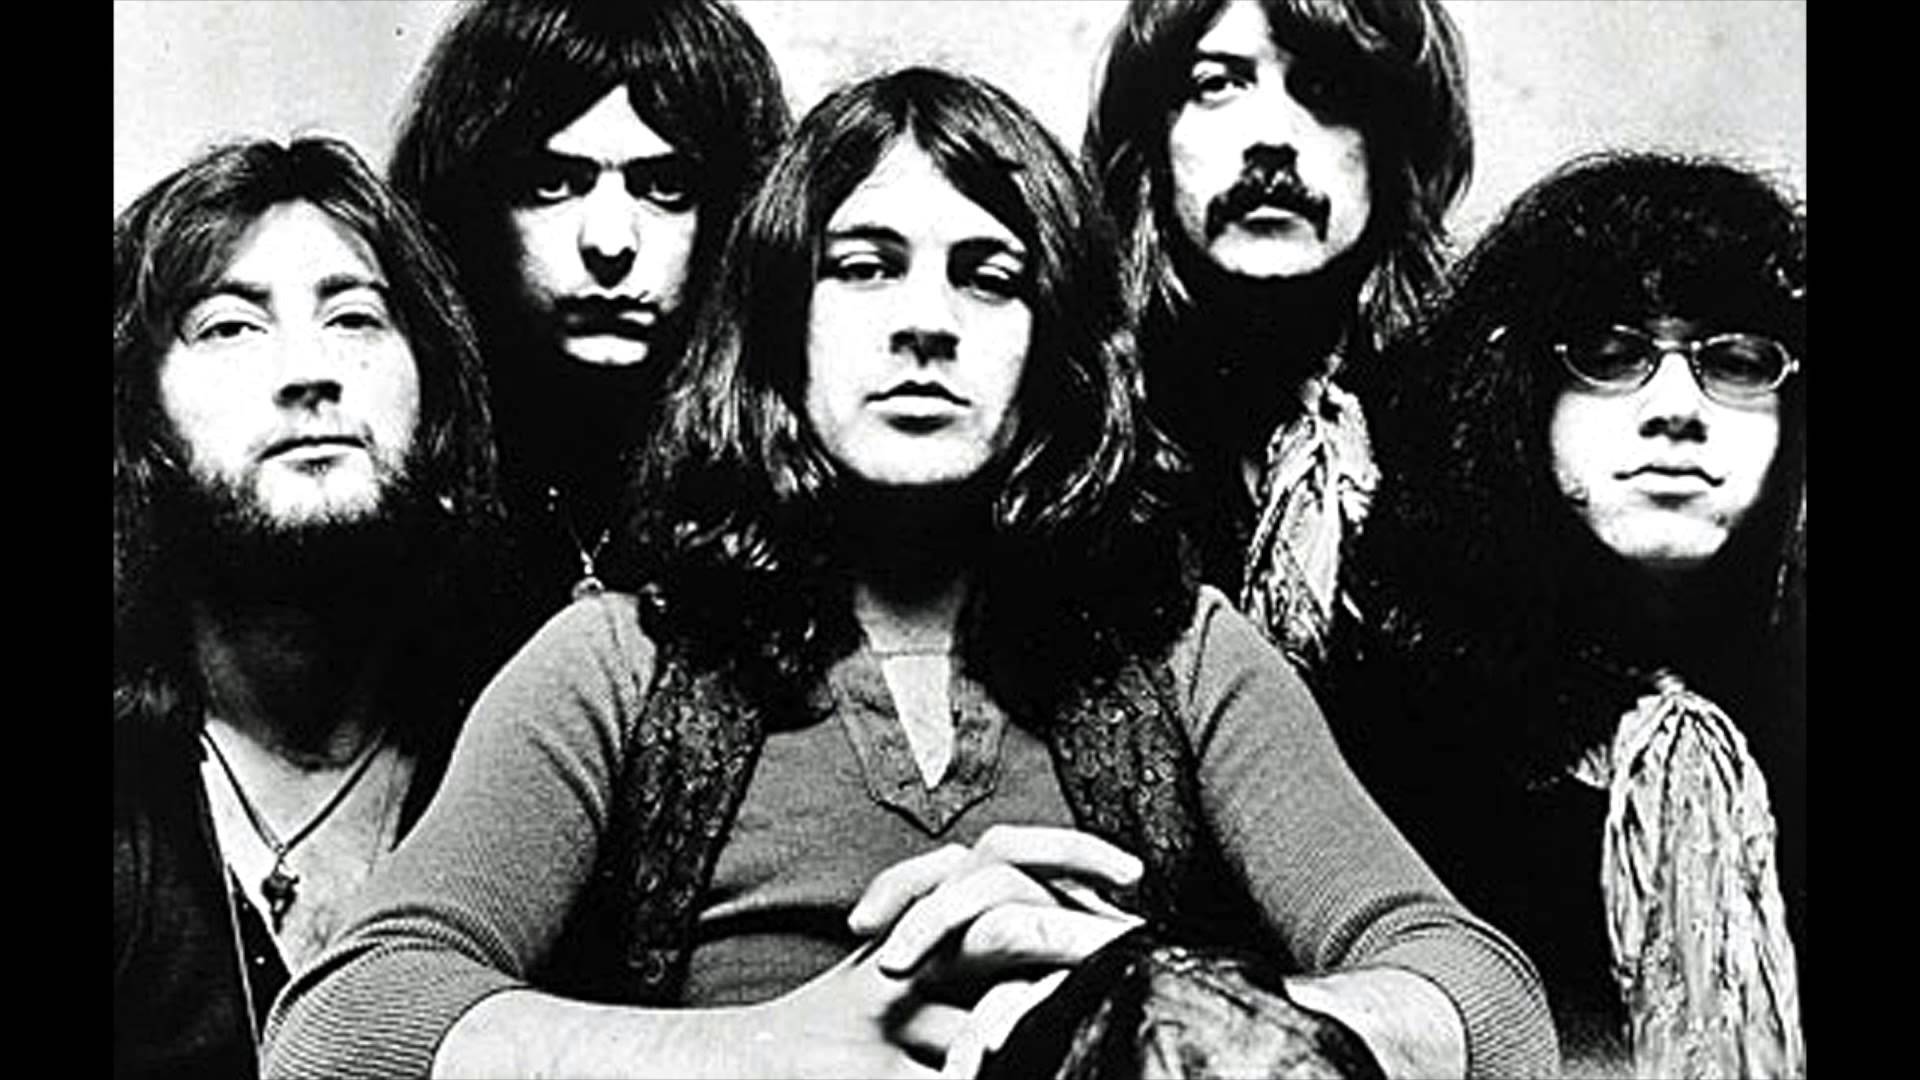 Deep Purple - Highway Star - YouTube